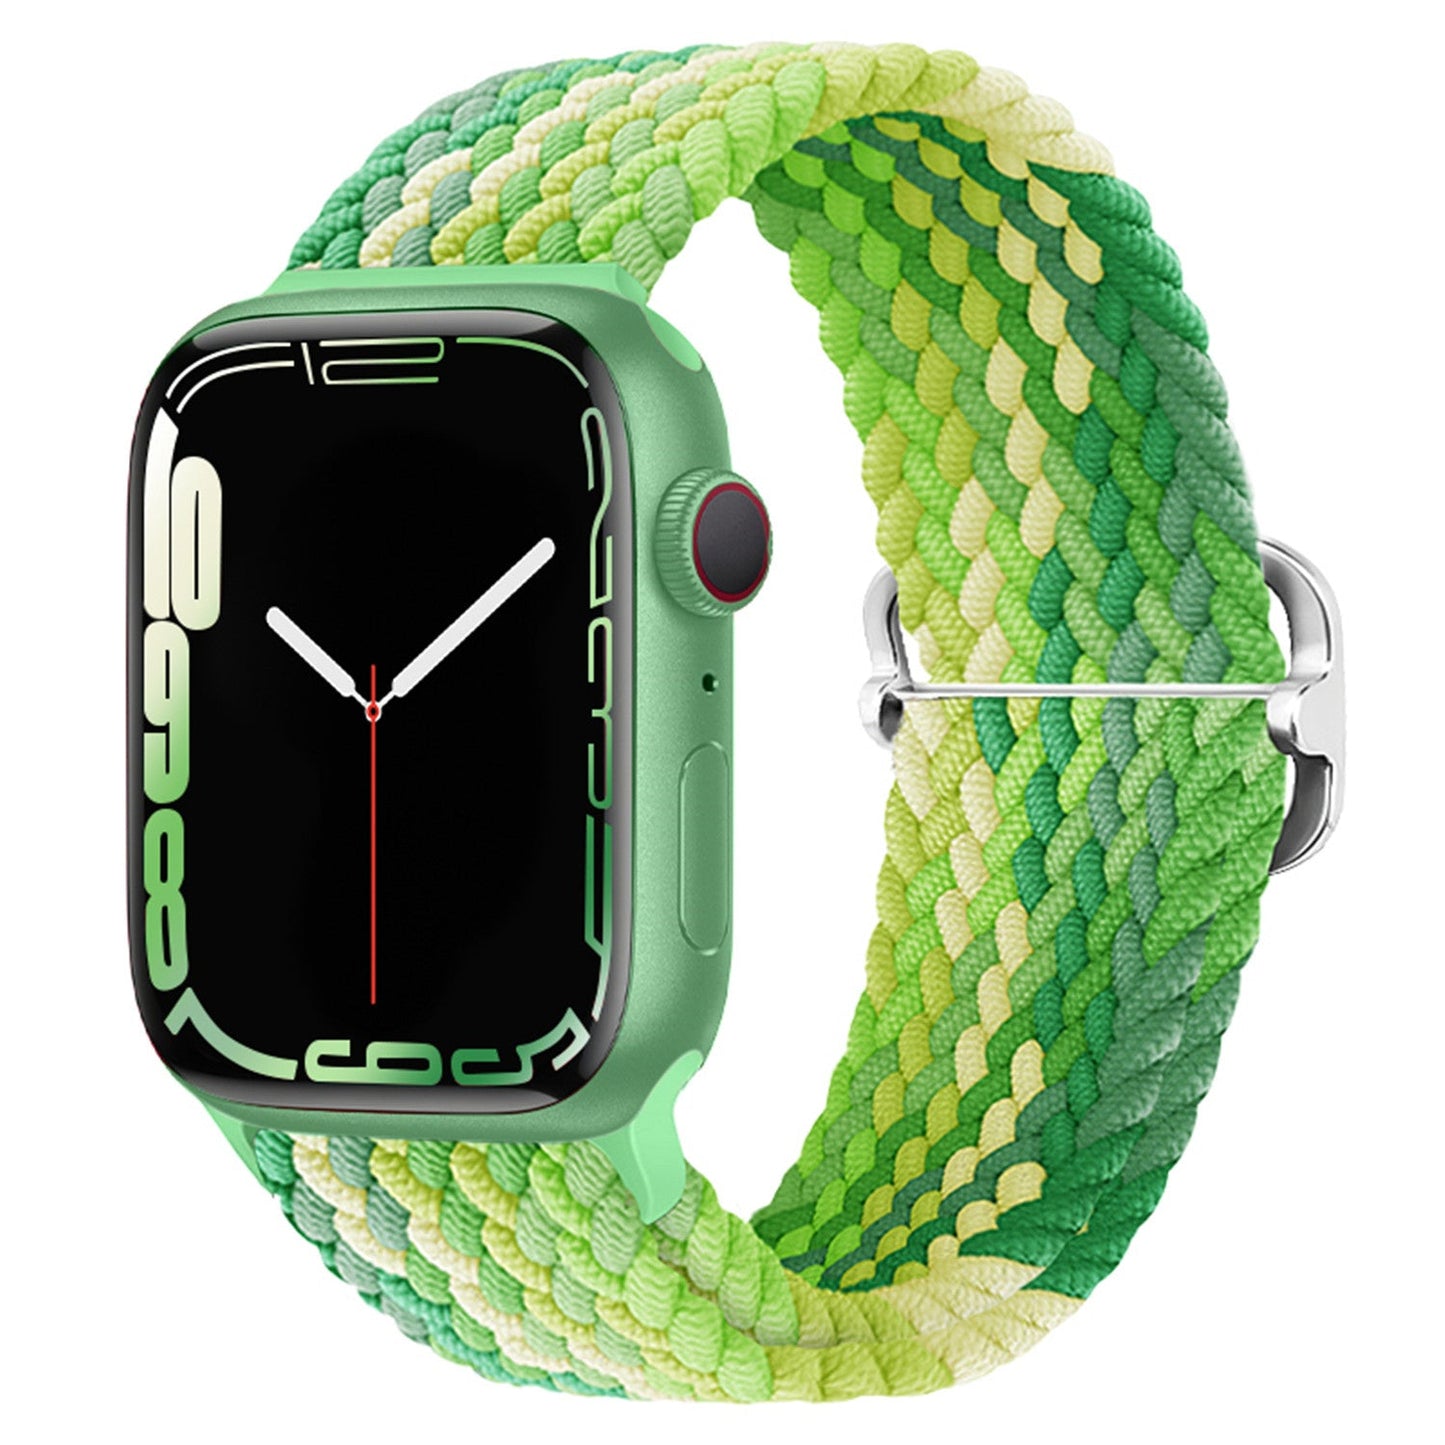 arktisband Apple Watch geflochtenes Flex Loop Multicolor Armband